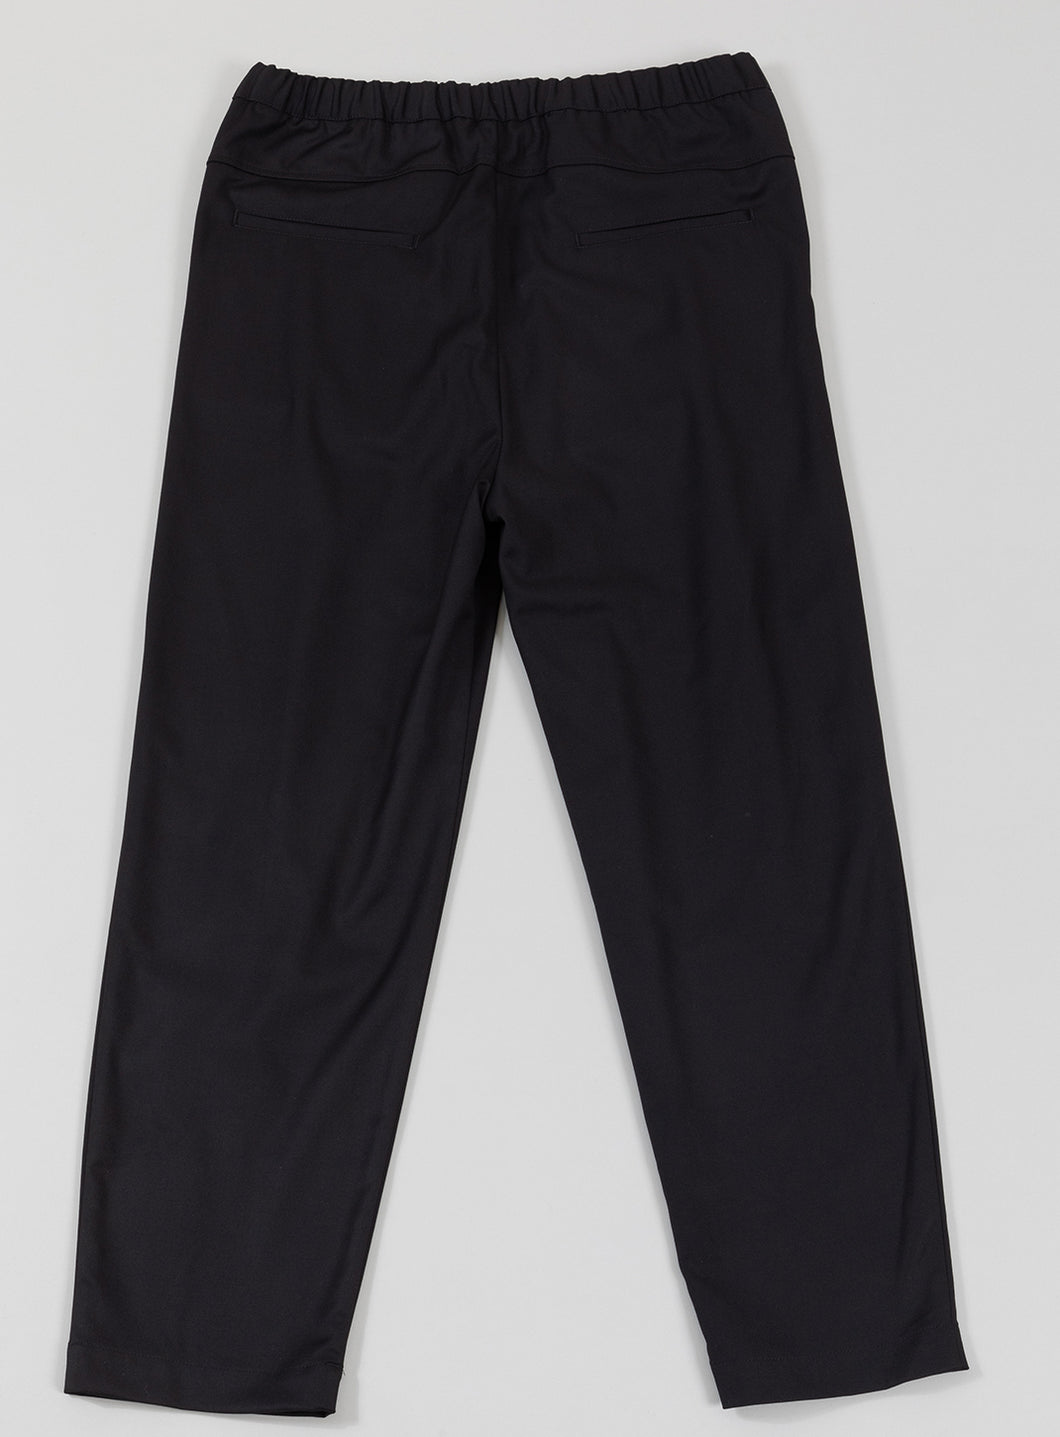 Elastic Waist Pants with Deep Pleats in Black Serge Fabric